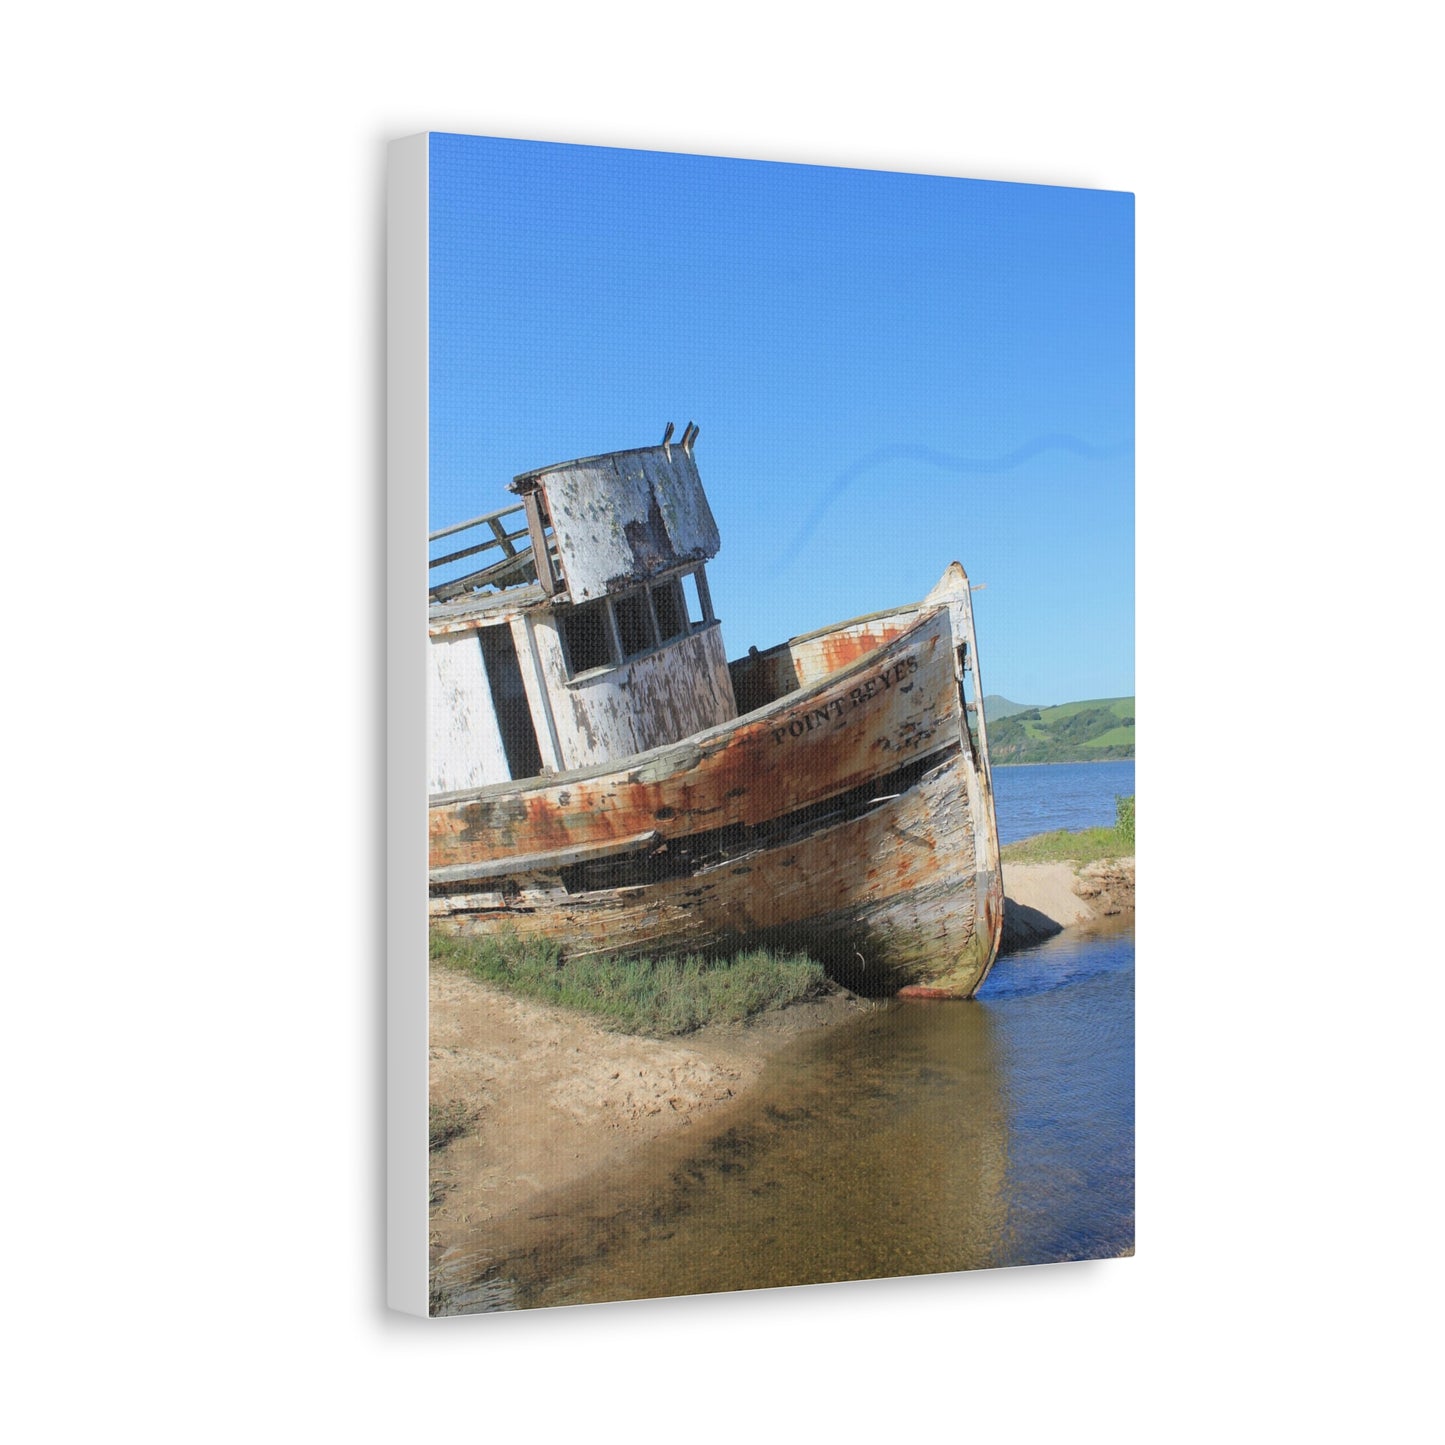 Shipwreck Canvas